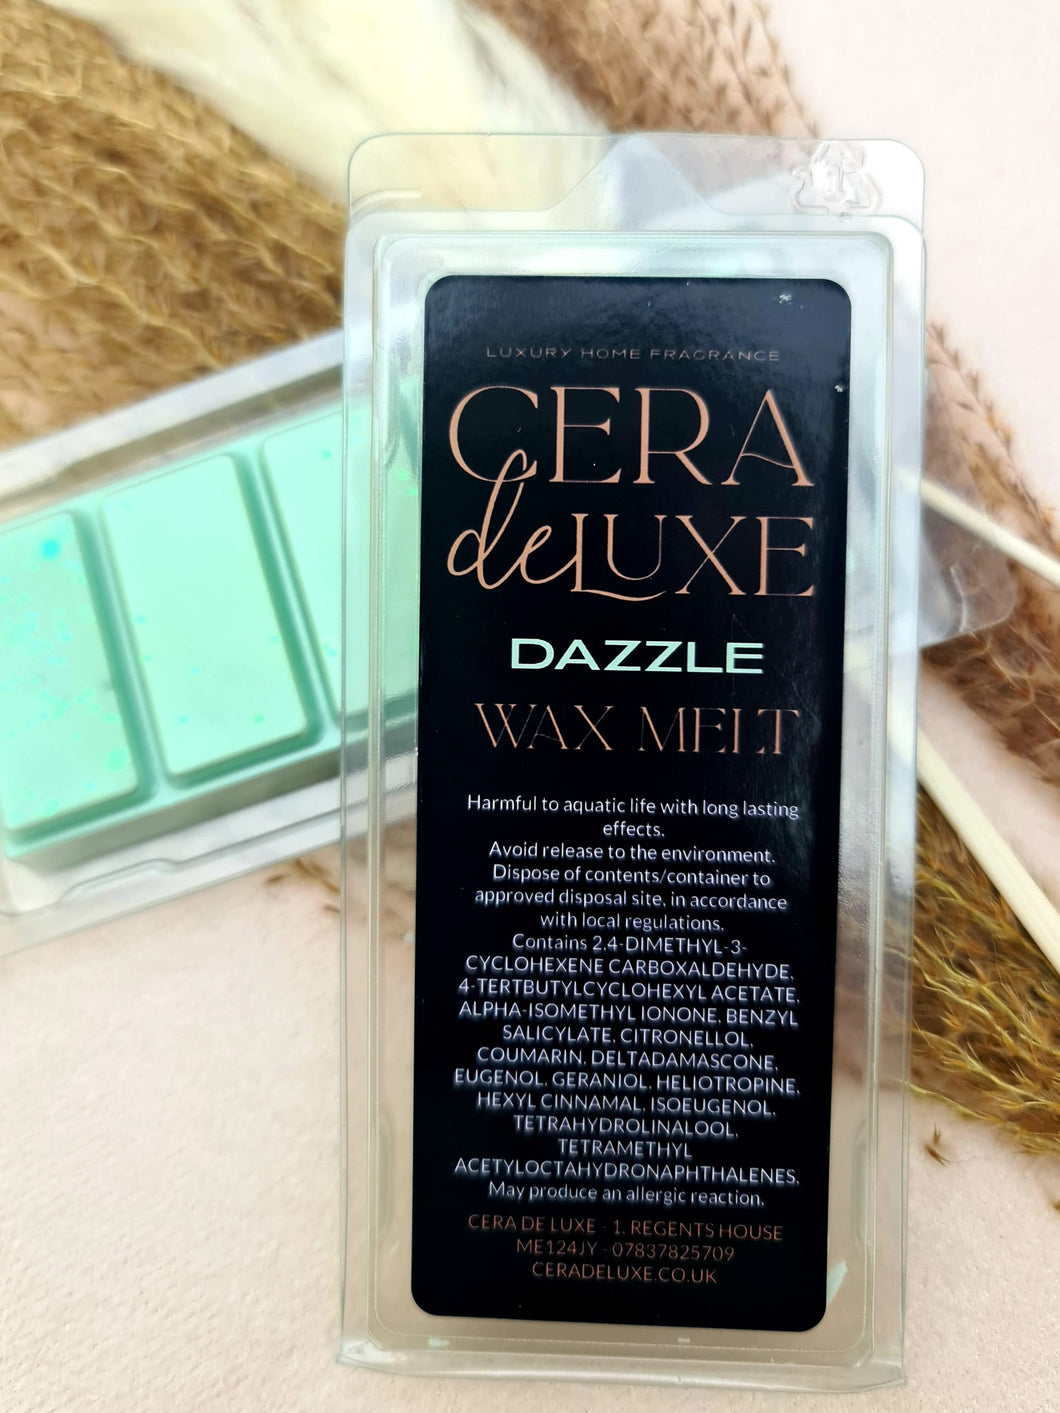 DAZZLE - Cera De Luxe - Luxury Home Fragrance